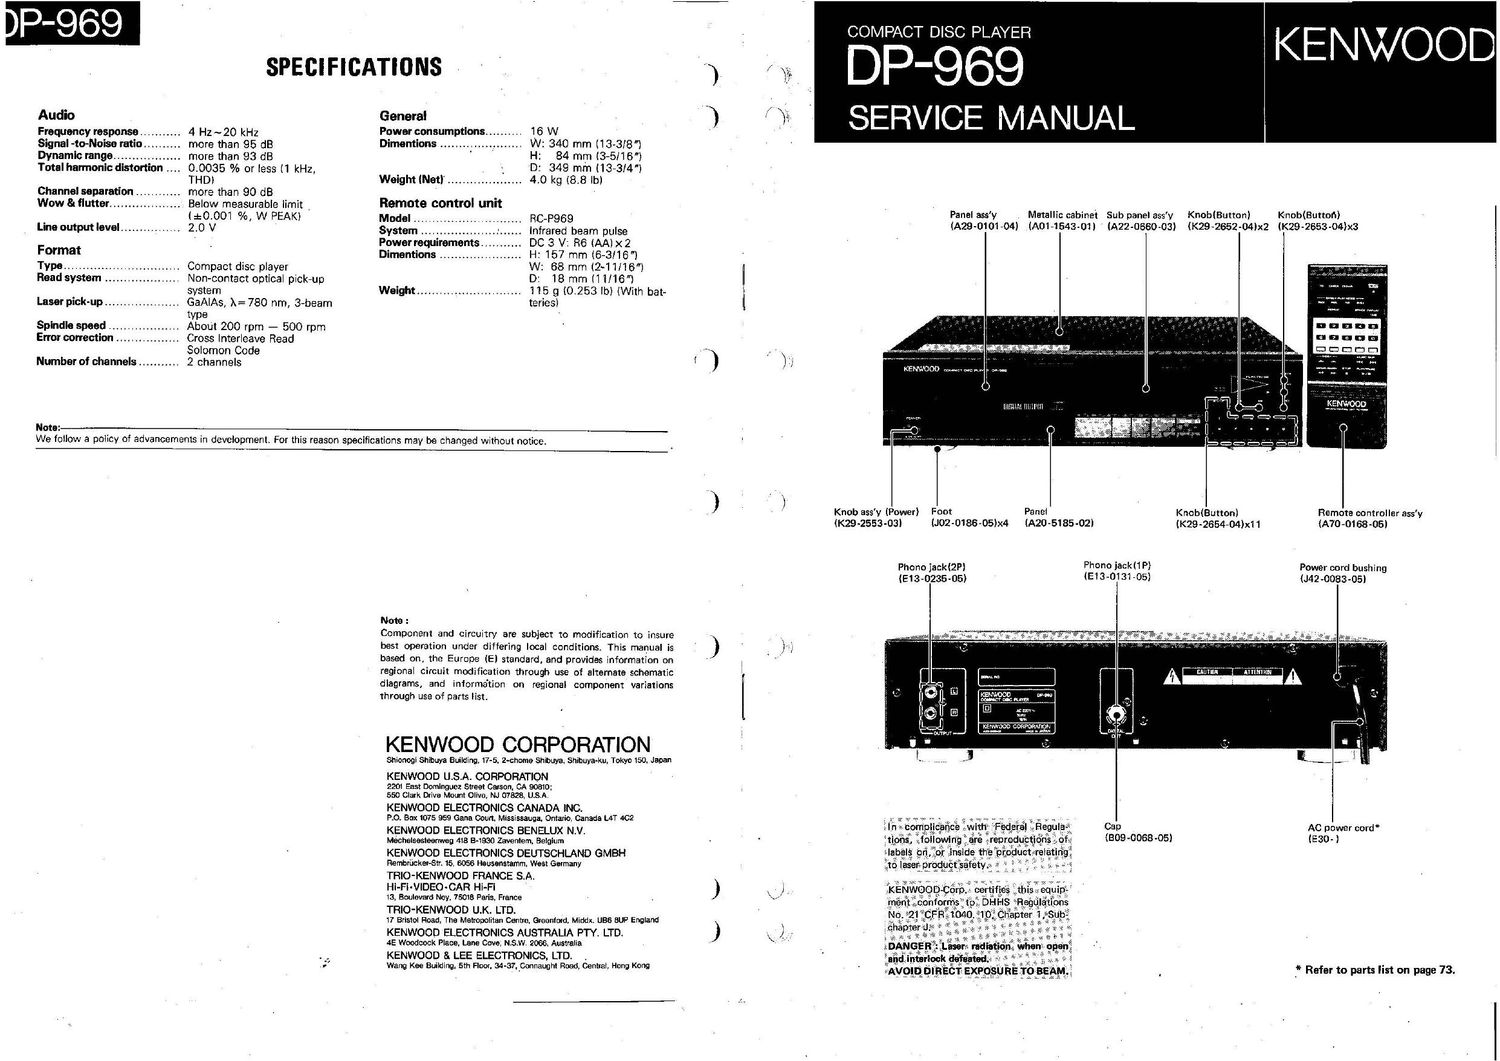 Download Kenwood DP 969 Service Manual